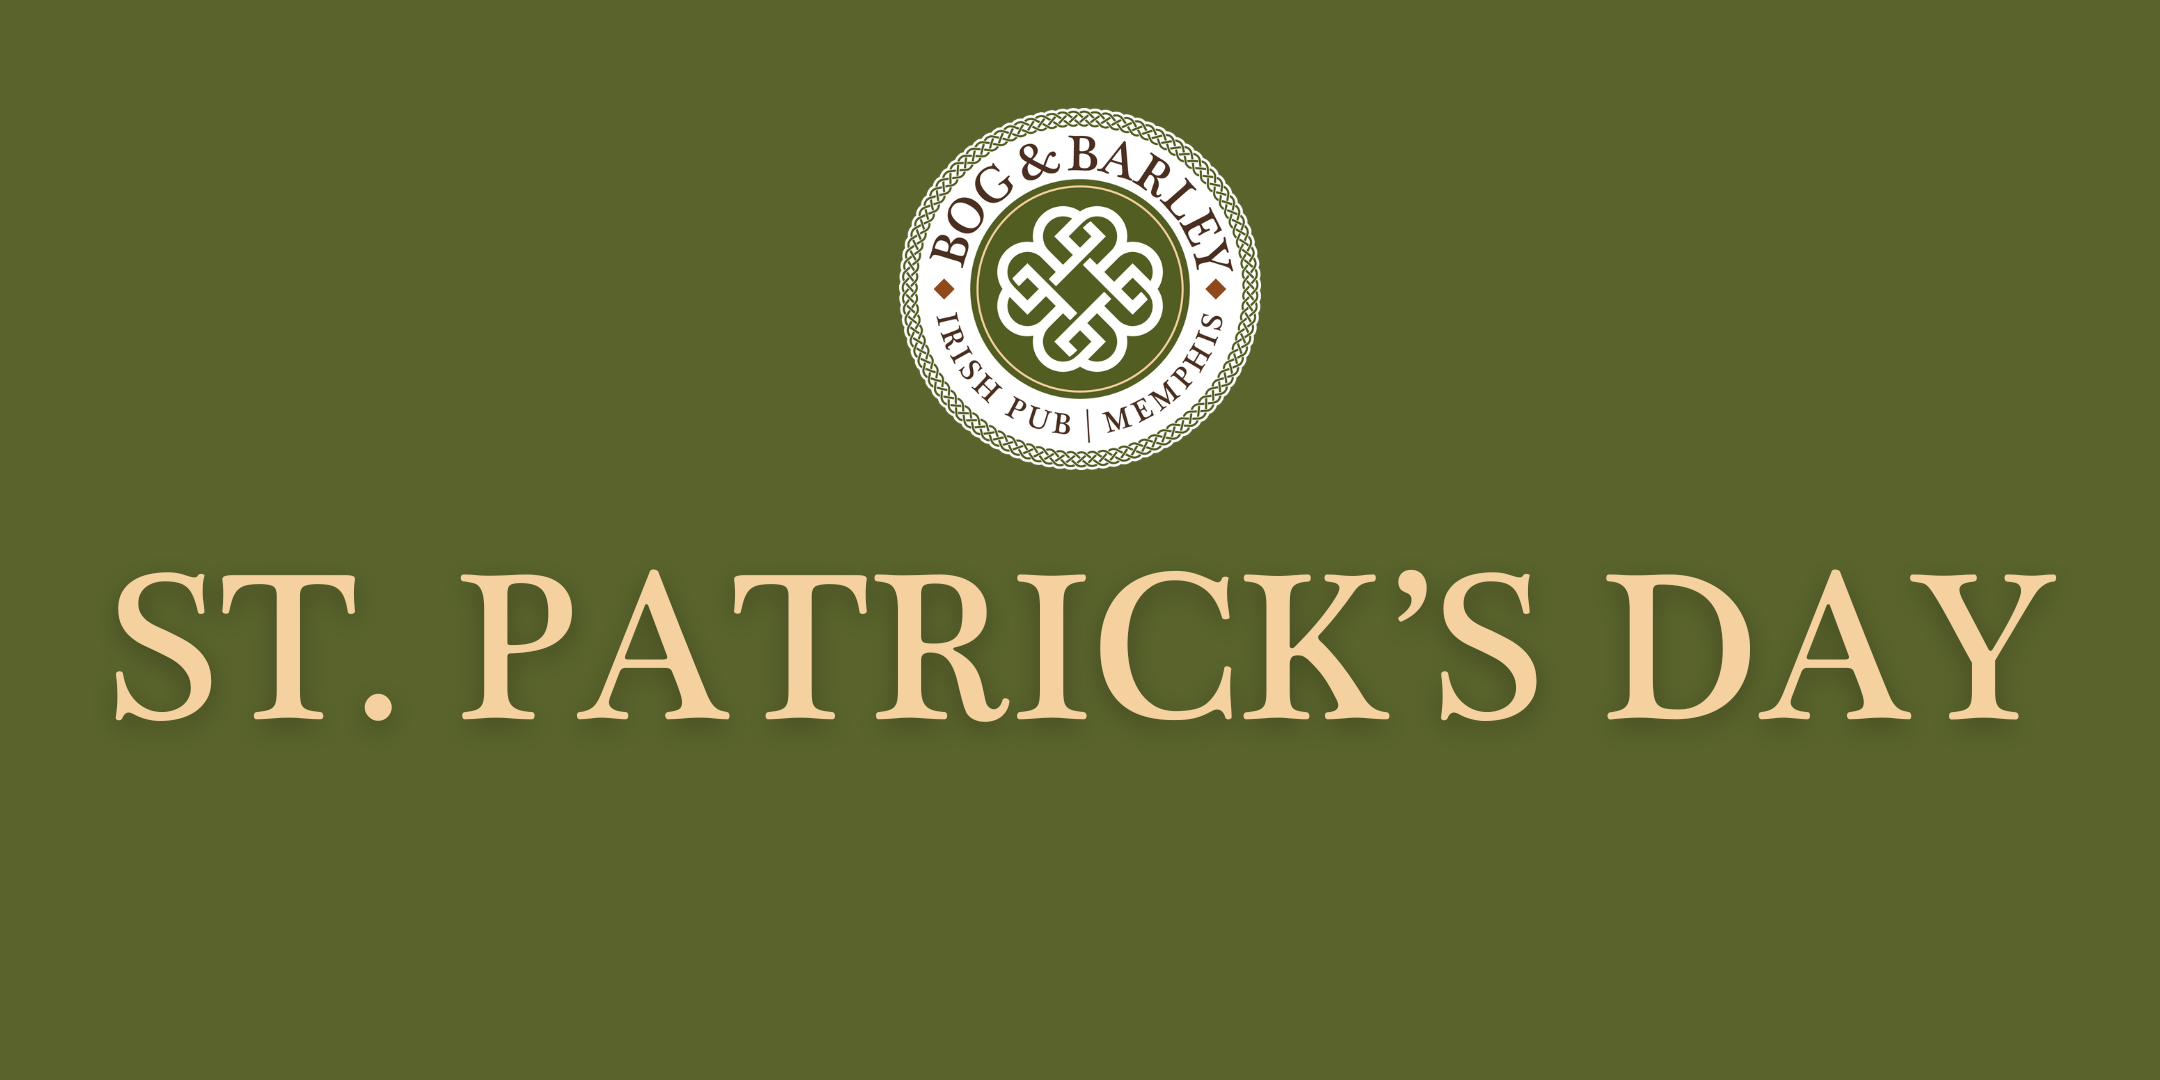 St. Patrick's Day logo with Bog & Barley symbols on a green background.